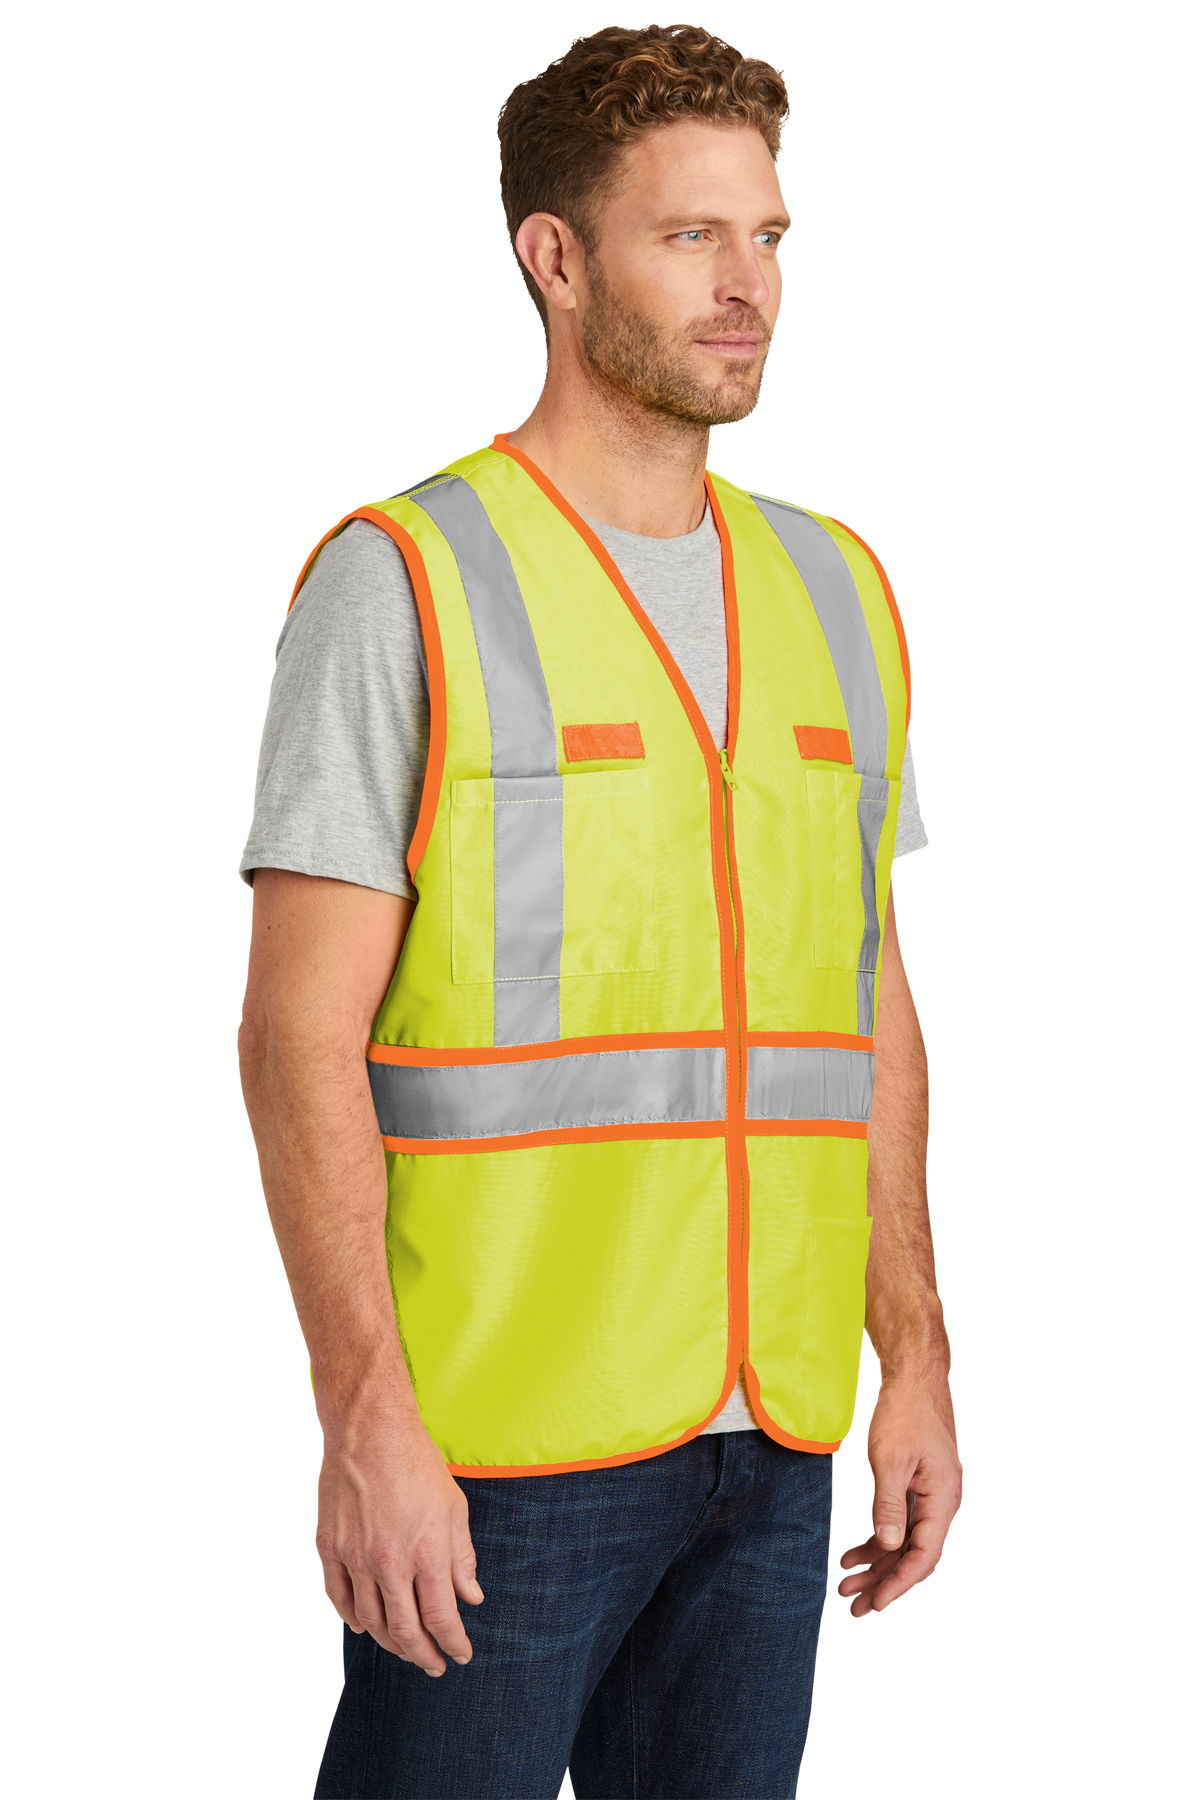 CornerStone - ANSI 107 Class 2 Dual-Color Safety Vest | Product | SanMar